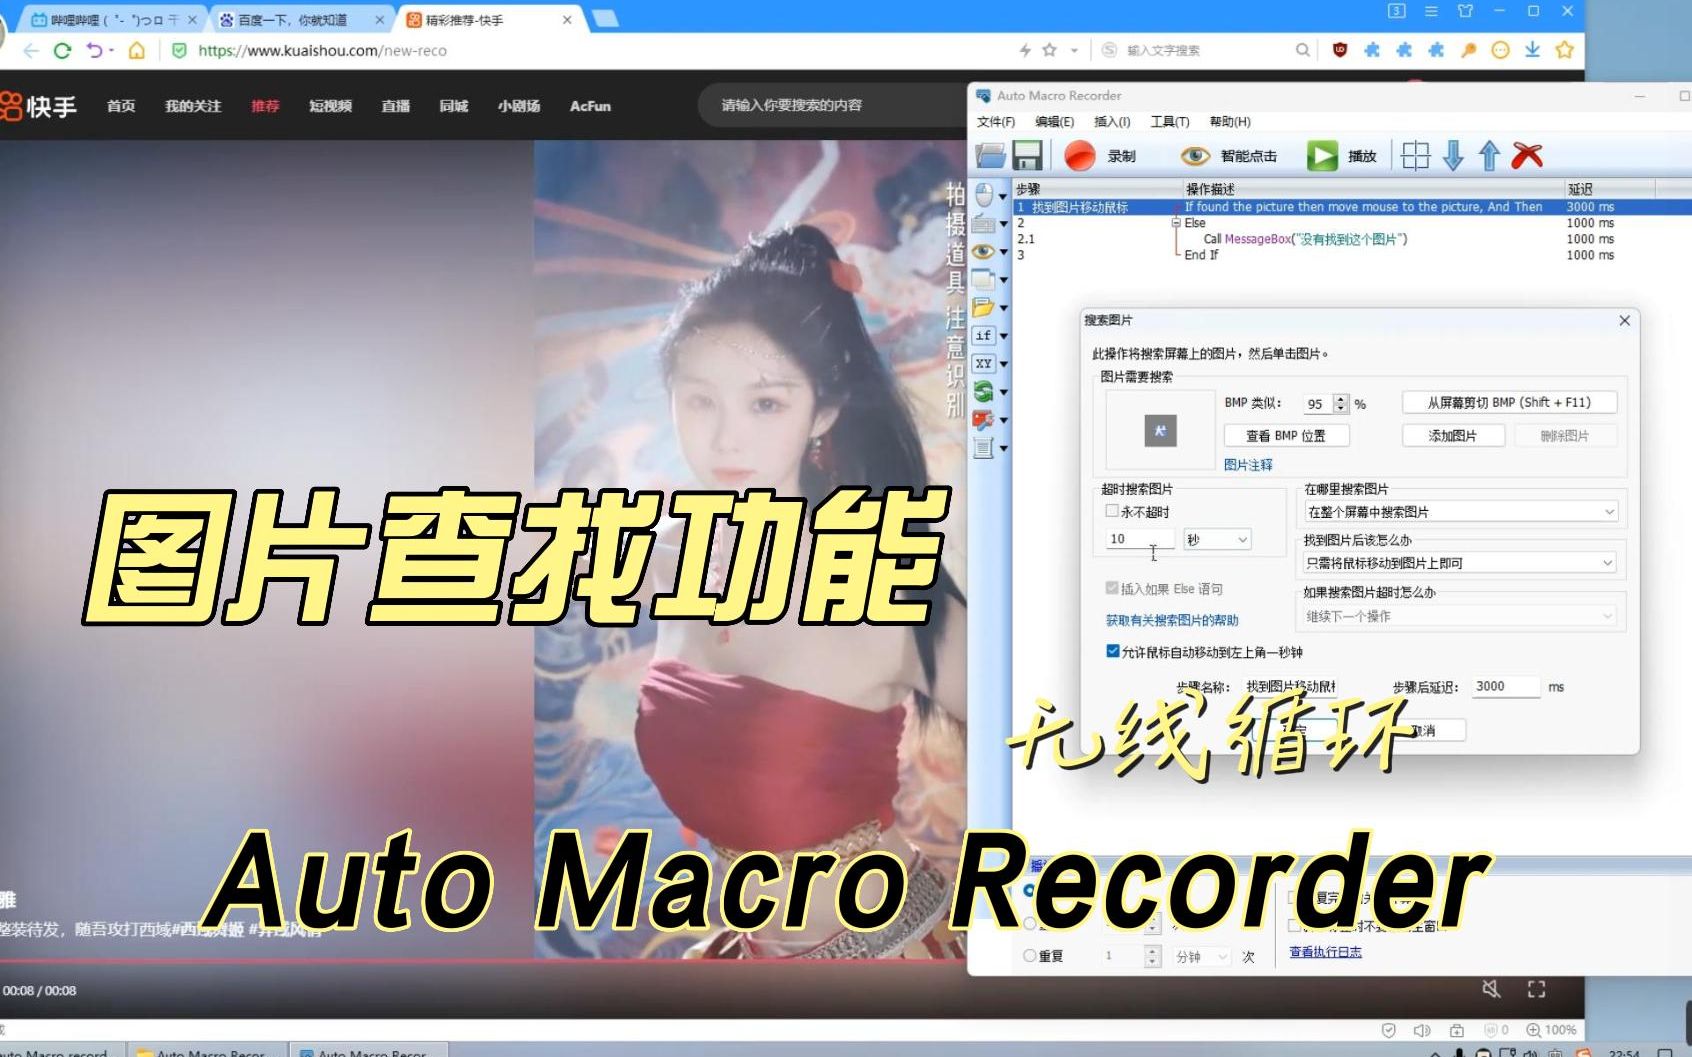 Auto Macro Recorder 图片查找点击、循环等操作介绍